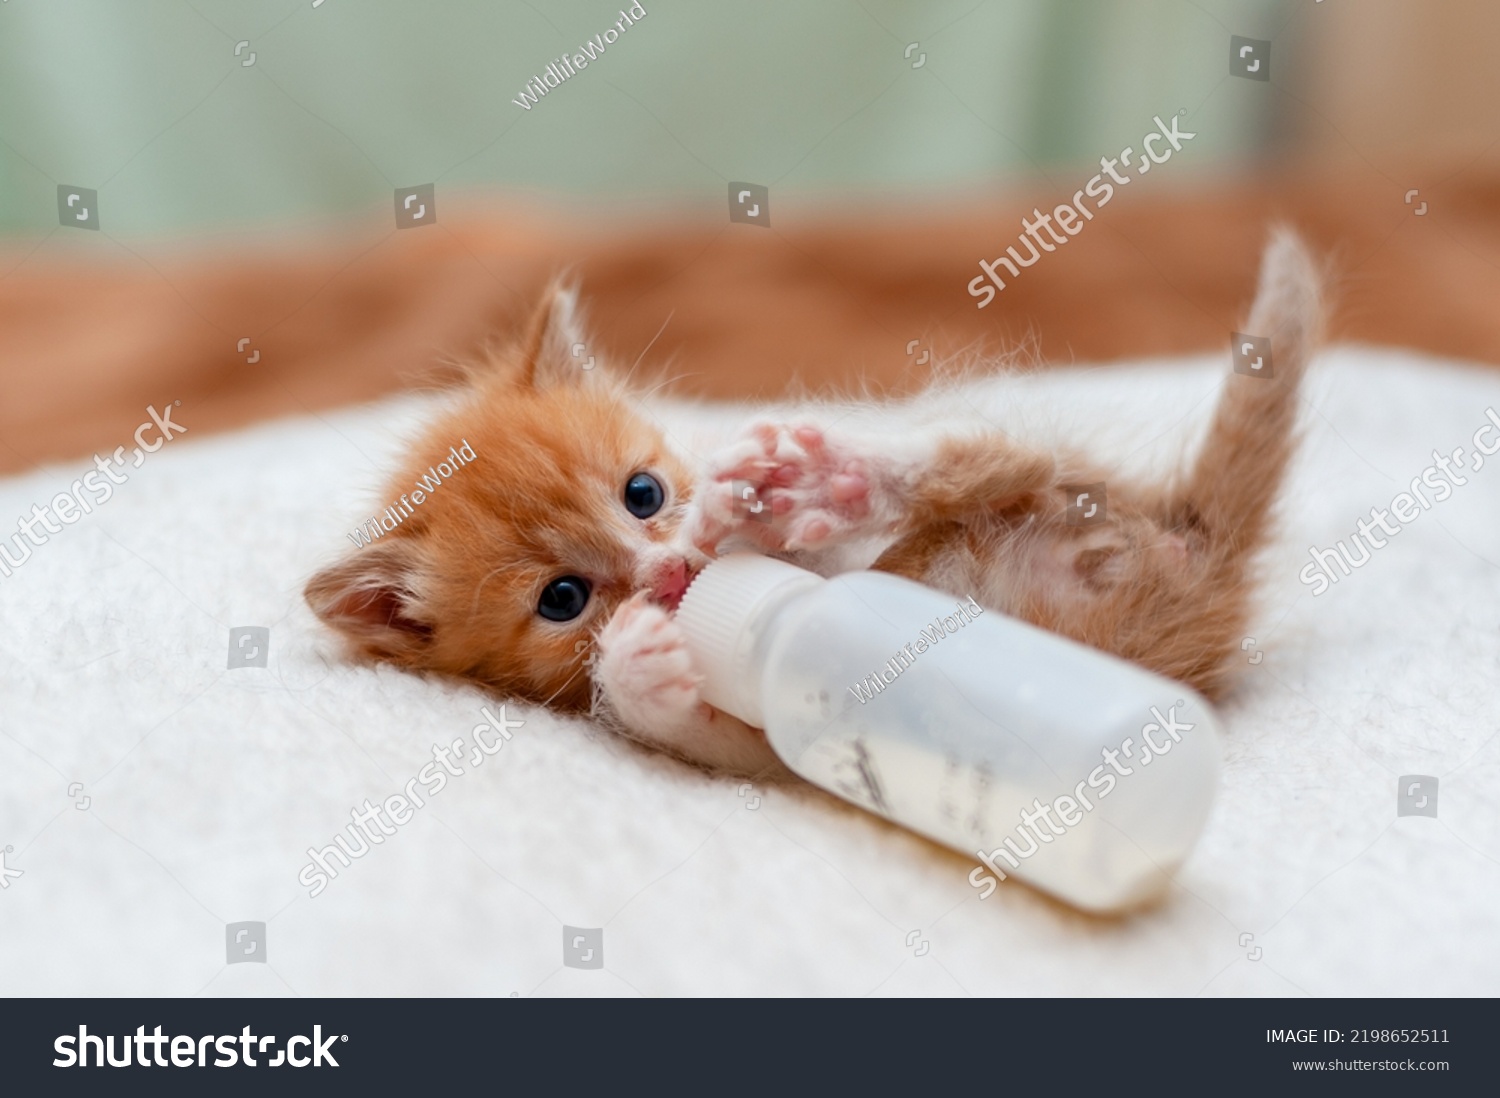 Feeding kitten with tiny milk bottle, tiny cat drinking milk from a bottle. #2198652511